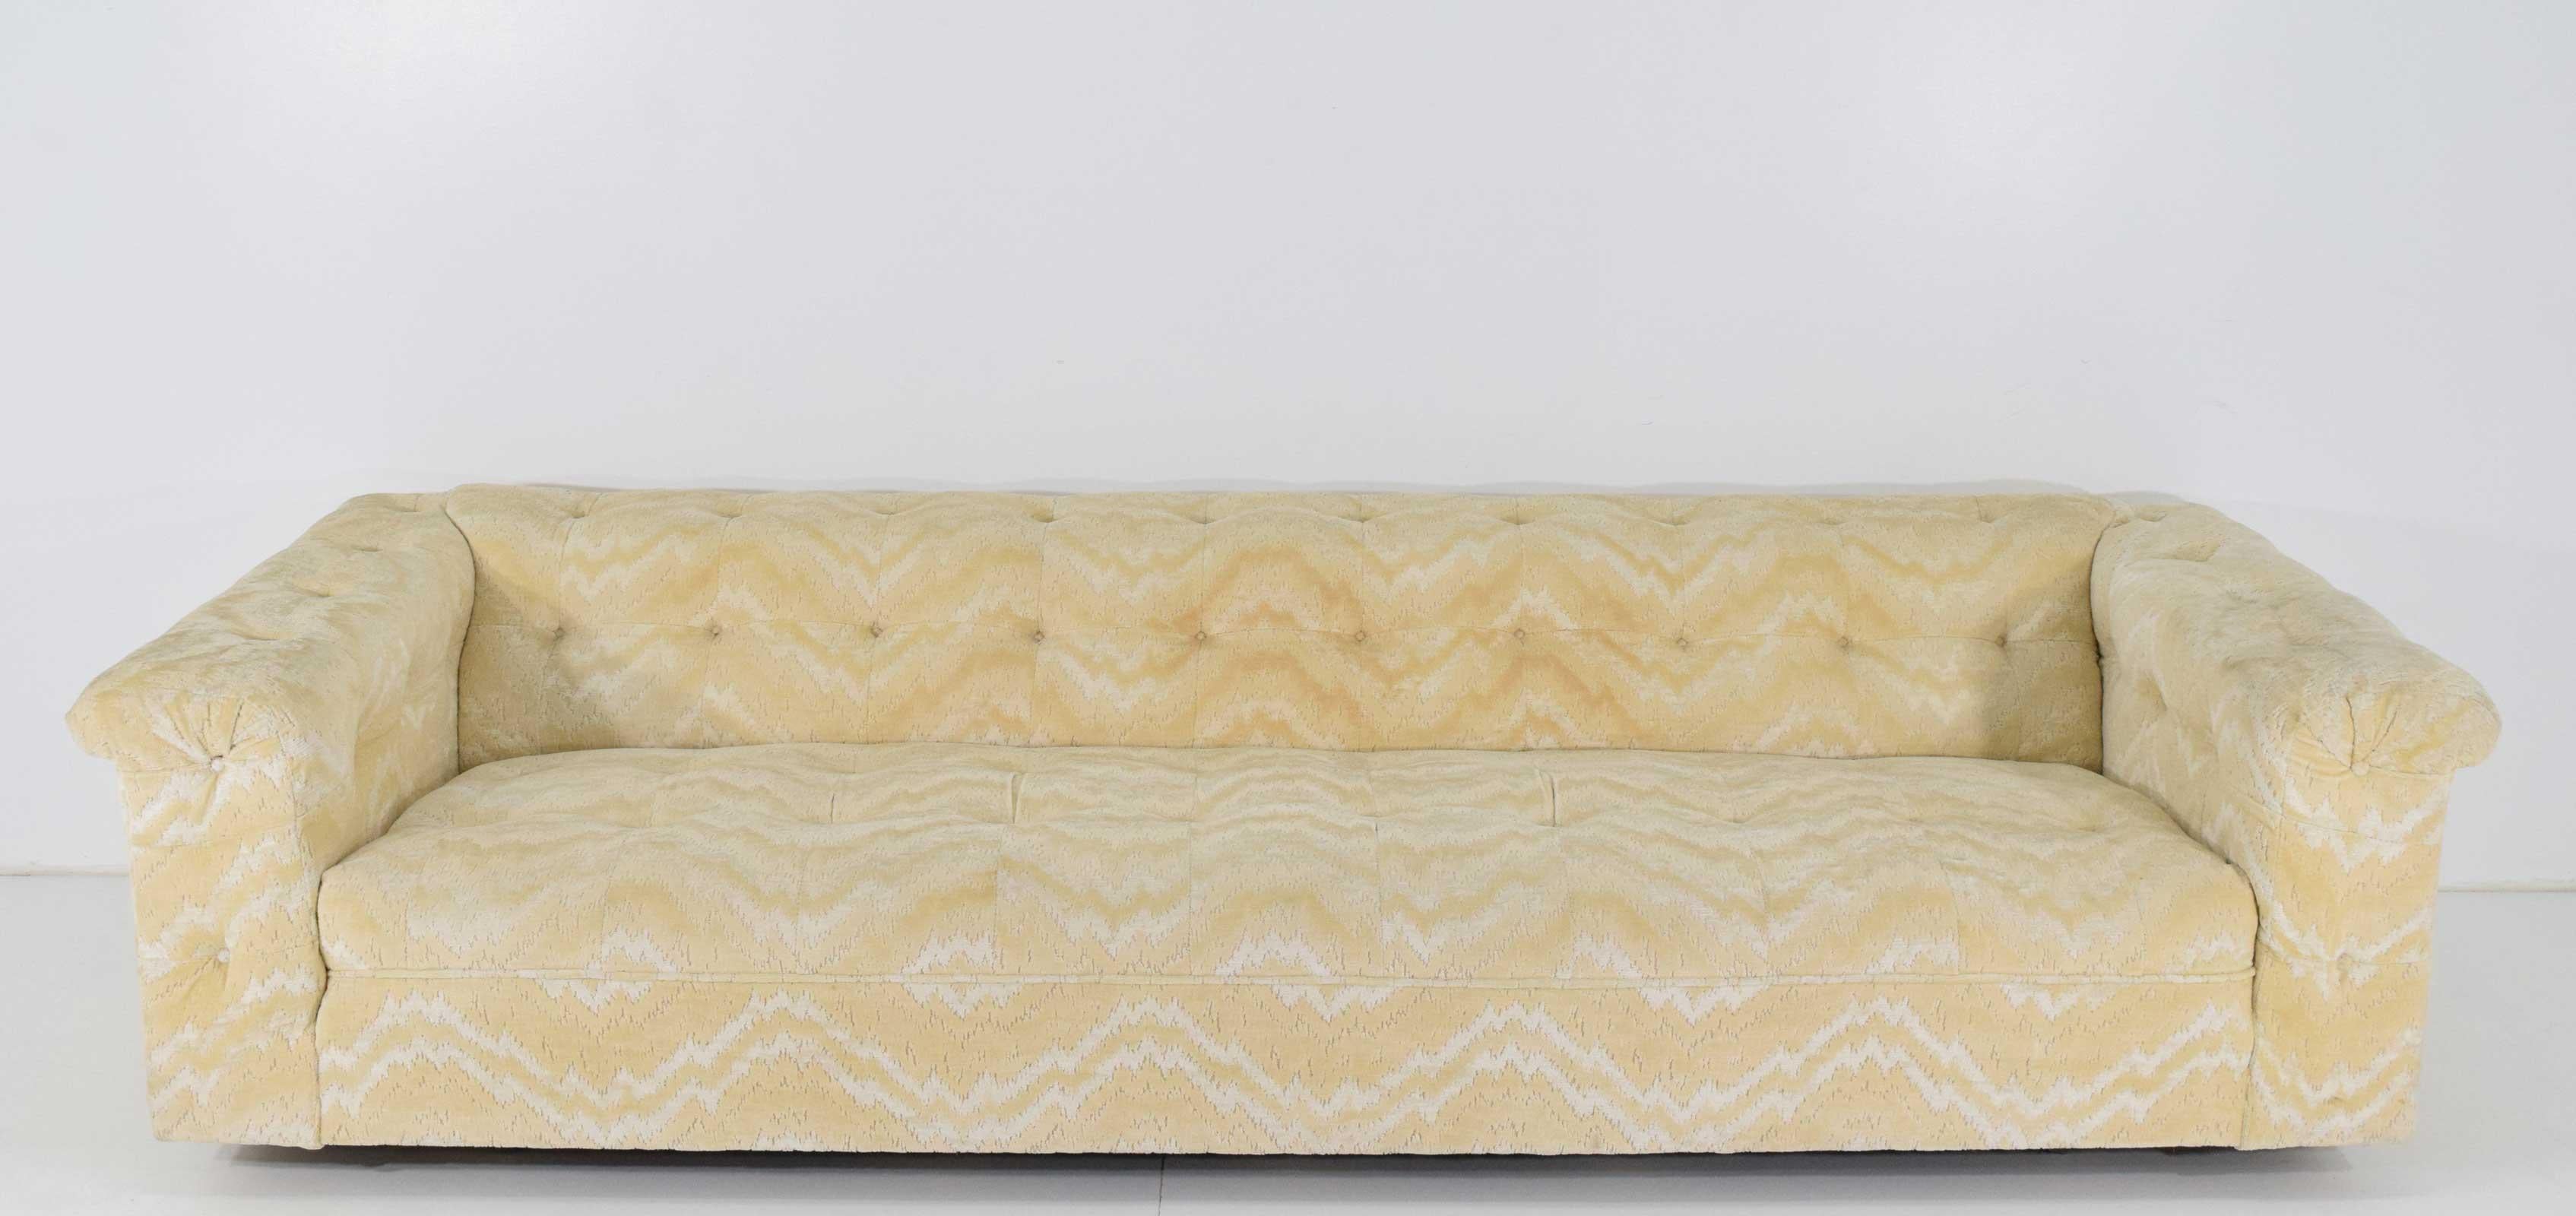 Upholstery Edward Wormley for Dunbar Party Sofa Model 5407, Pair Available